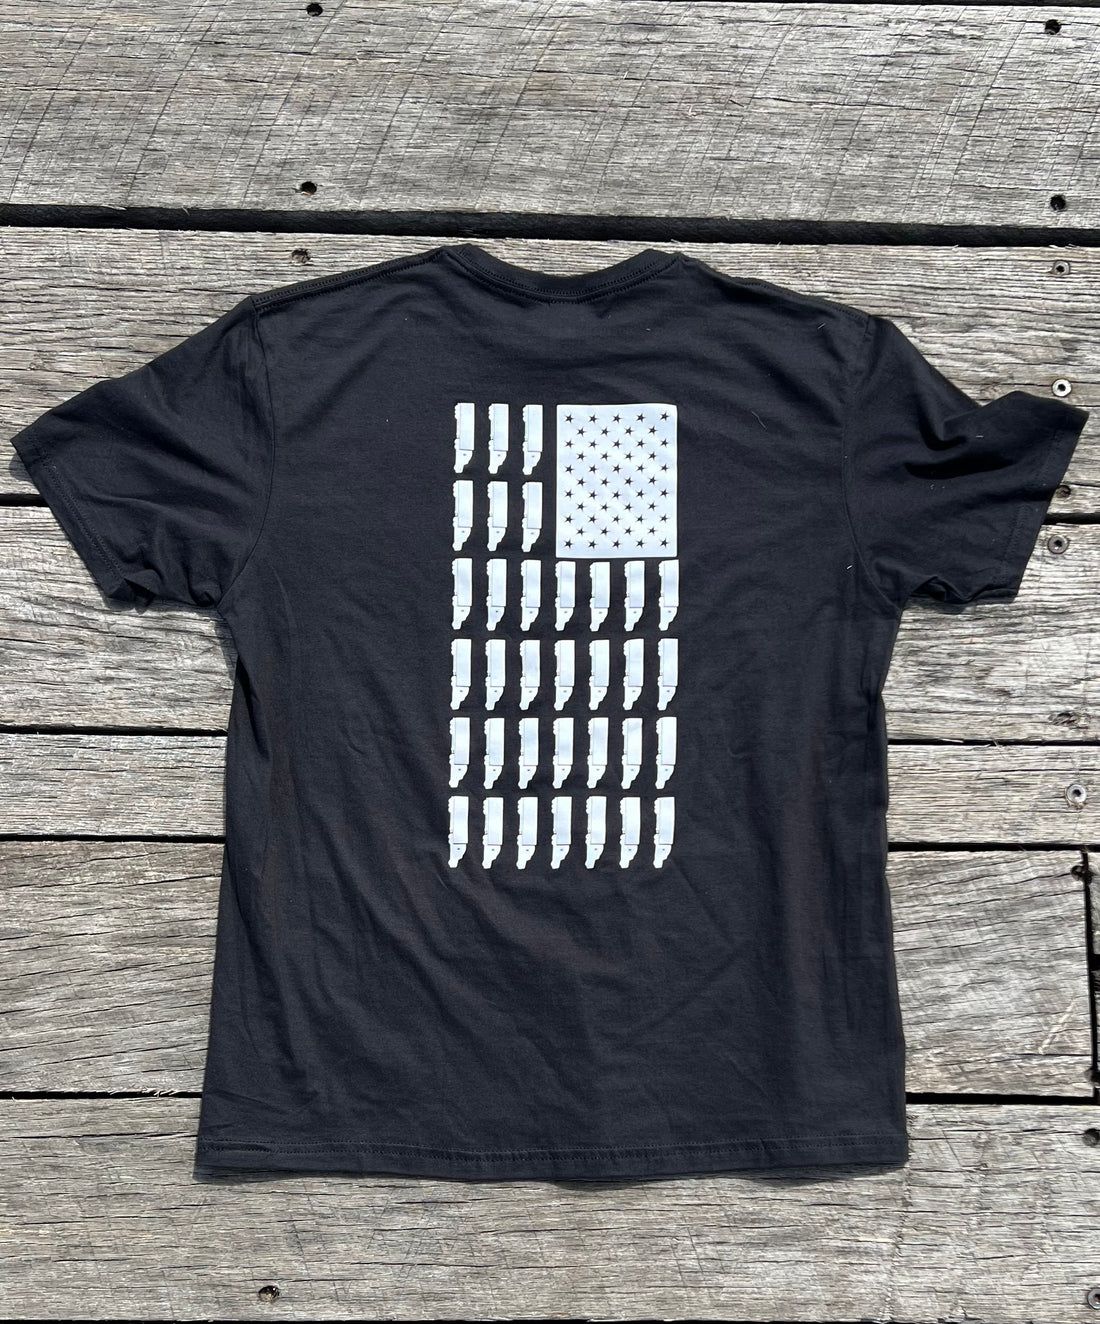 BreakerOne9 - USA Trucker Flag T-shirt - Black